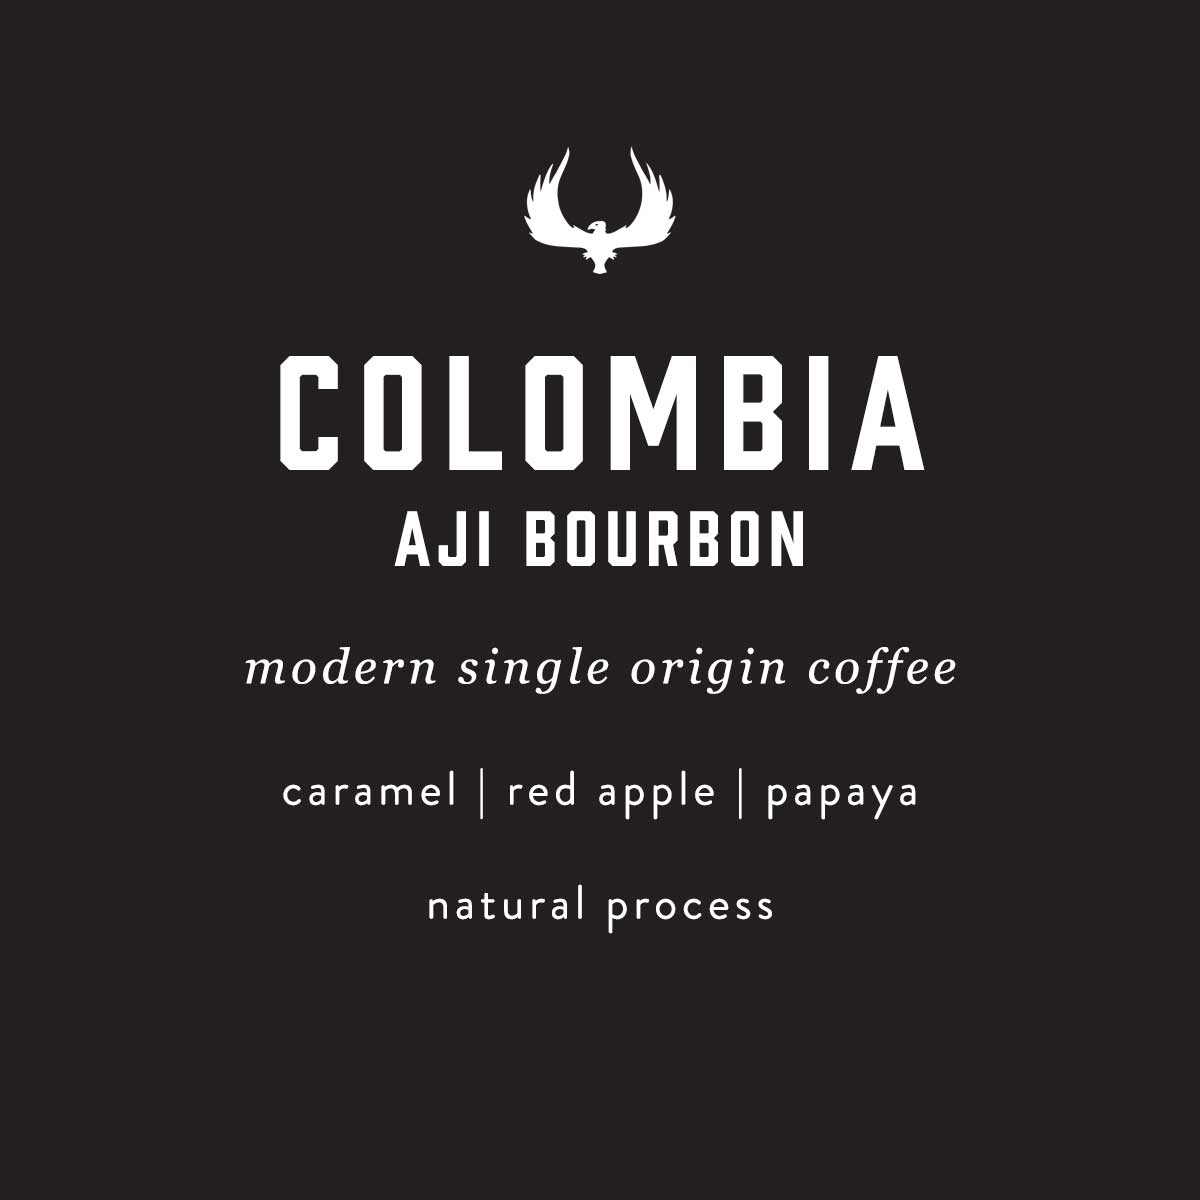 Colombia Aji Bourbon - Caramel, Red Apple, and Papaya